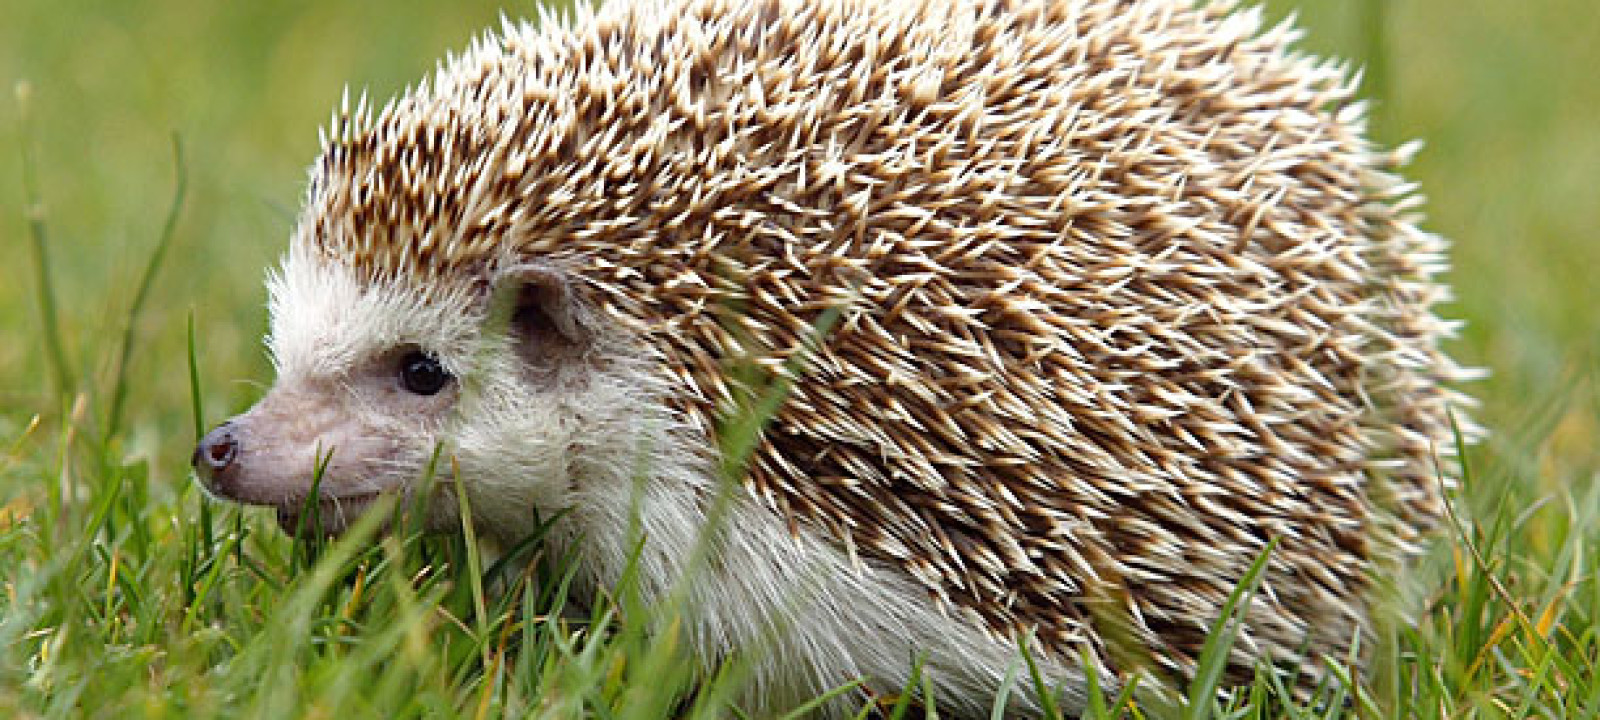 hedgehog-1600x720.jpg